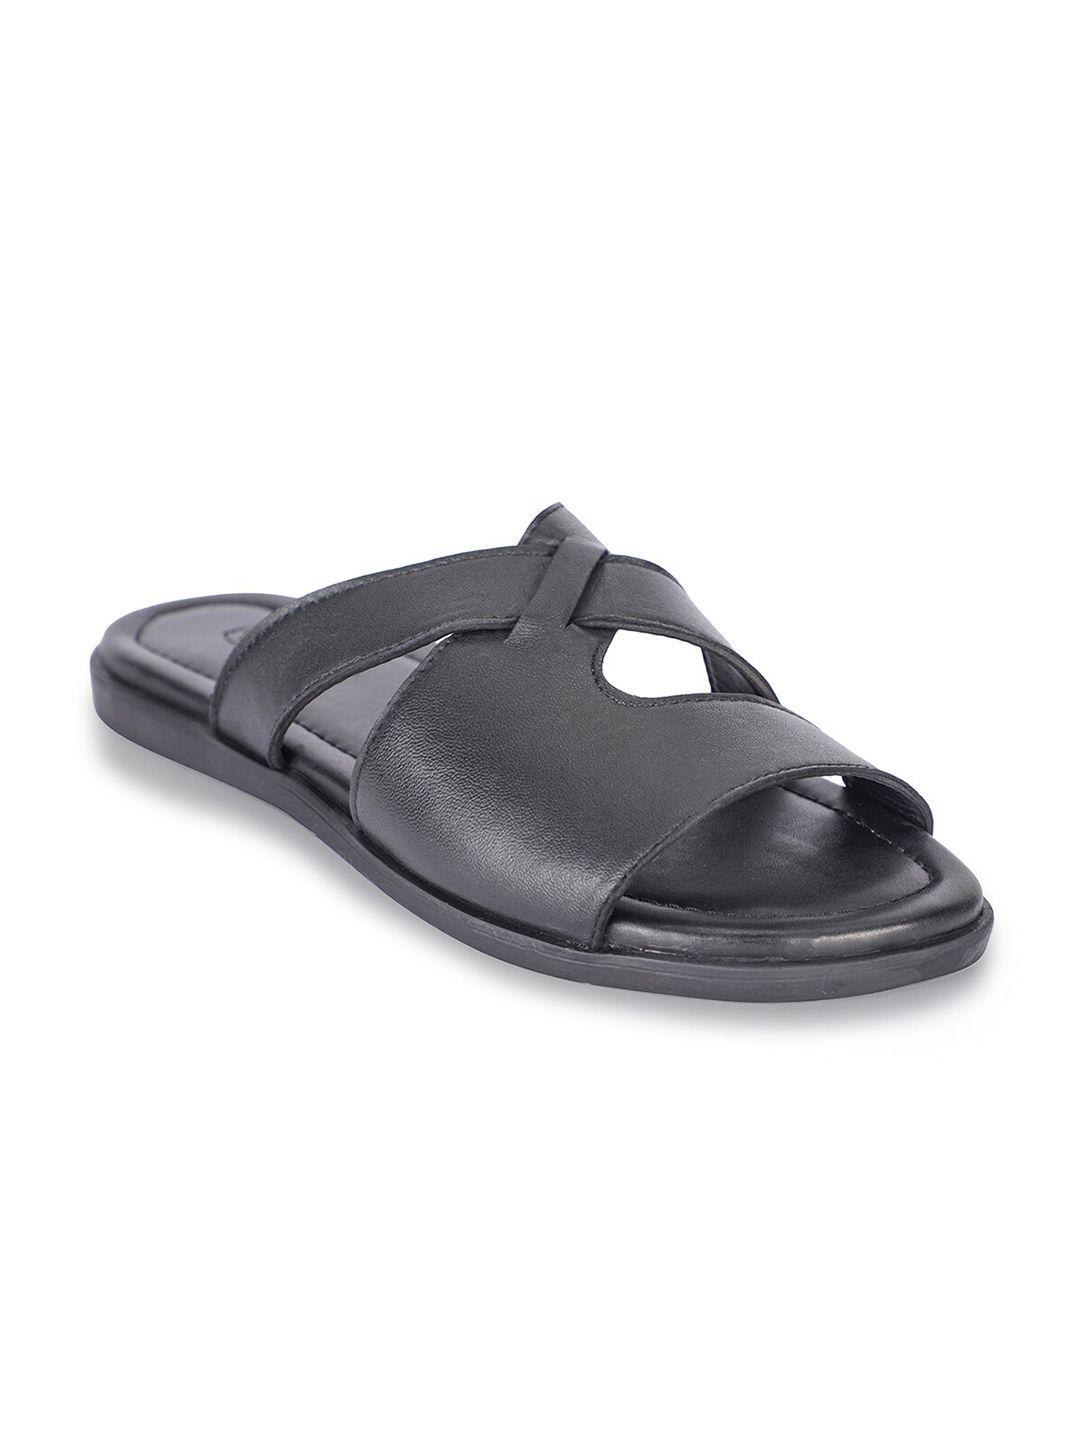 beaver men open toe leather comfort sandals